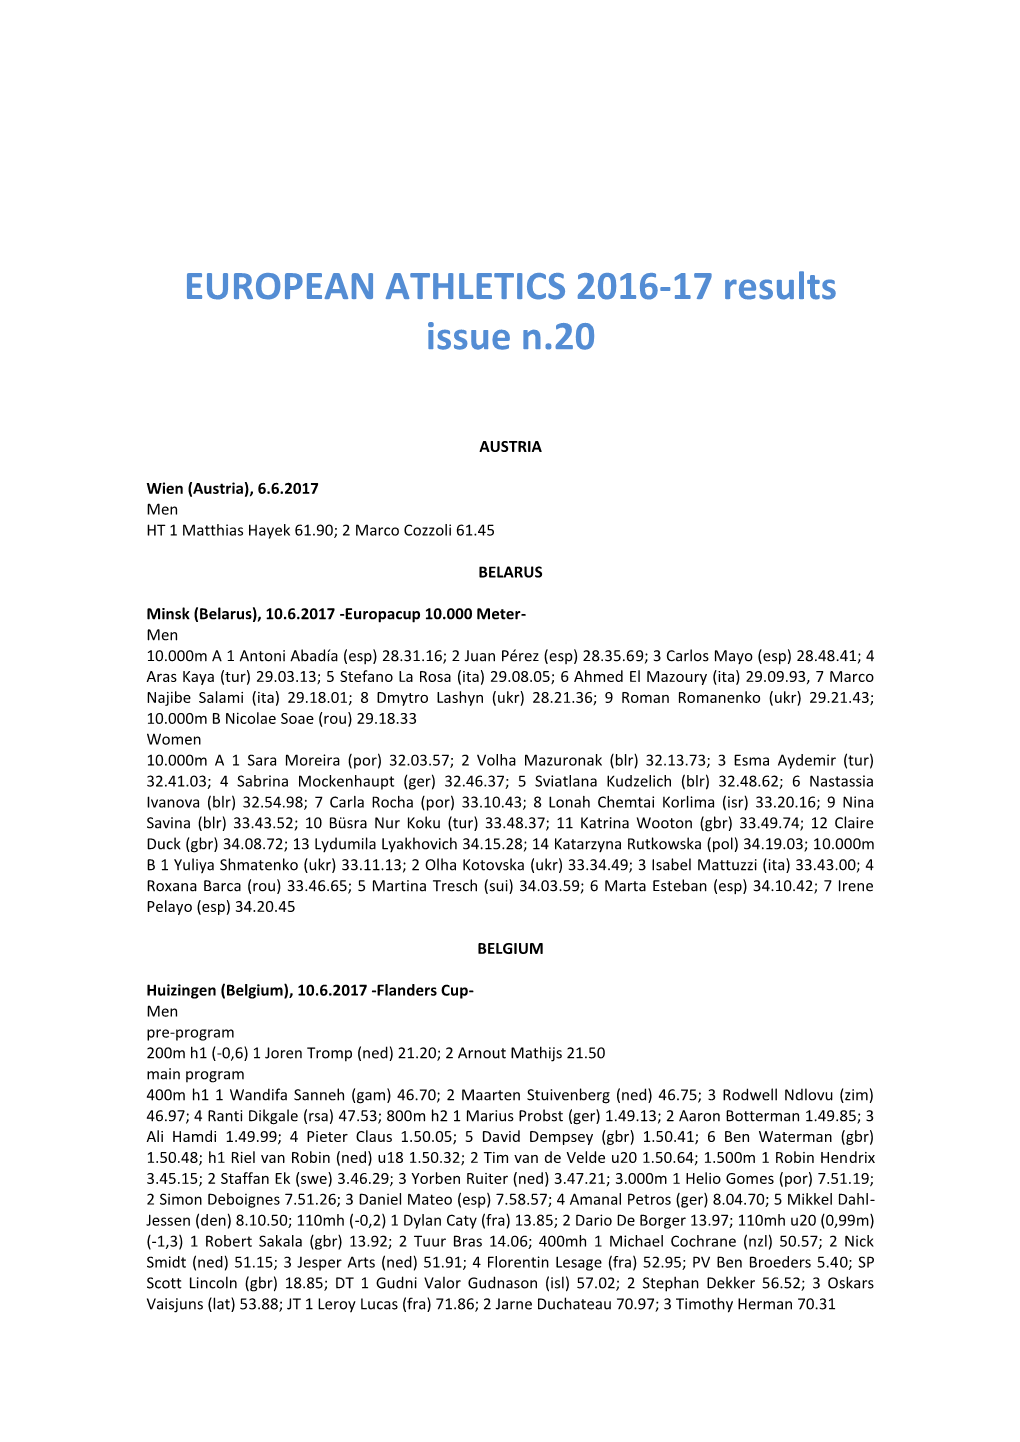 EUROPEAN ATHLETICS 2016-17 Results Issue N.20